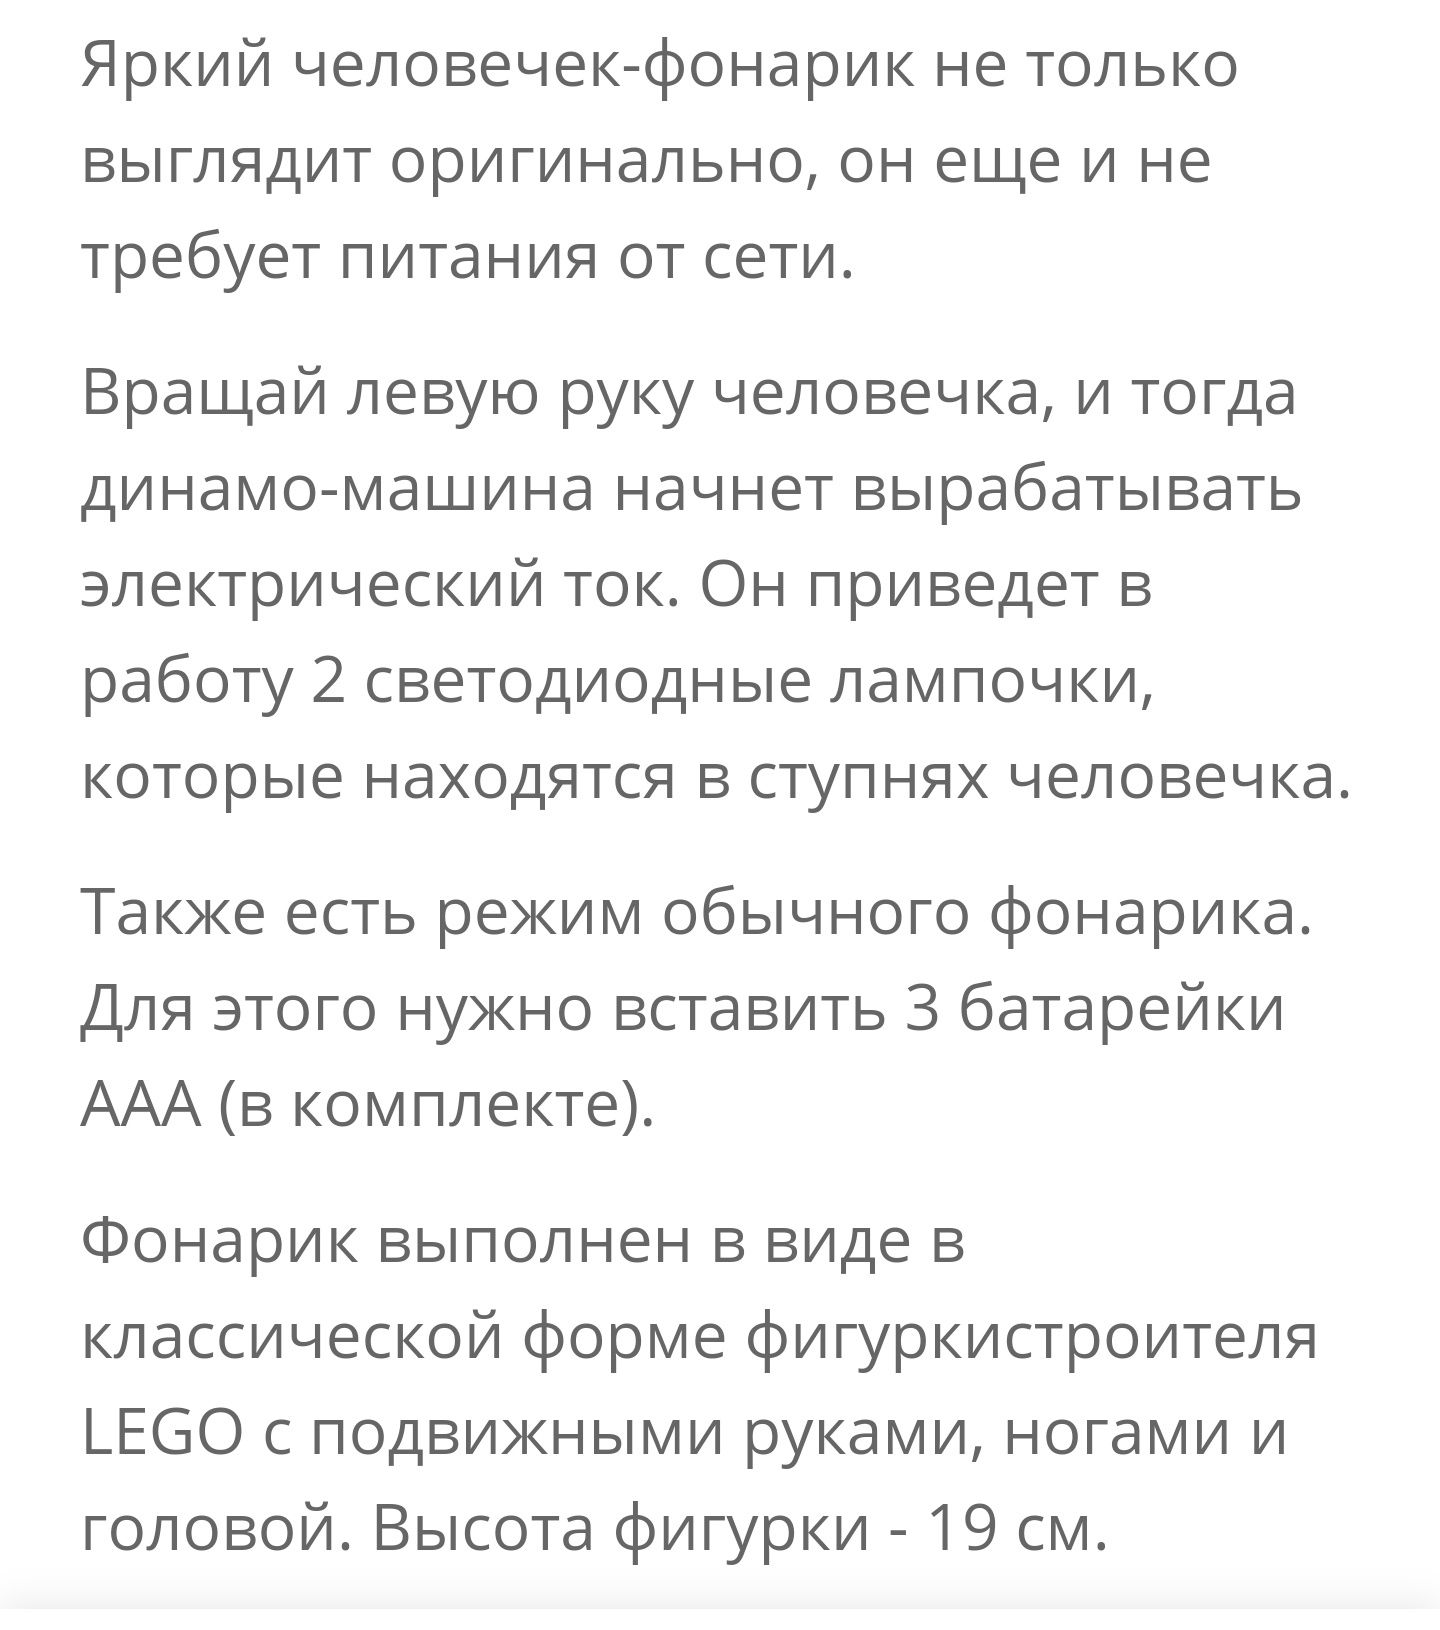 LEGO человечек